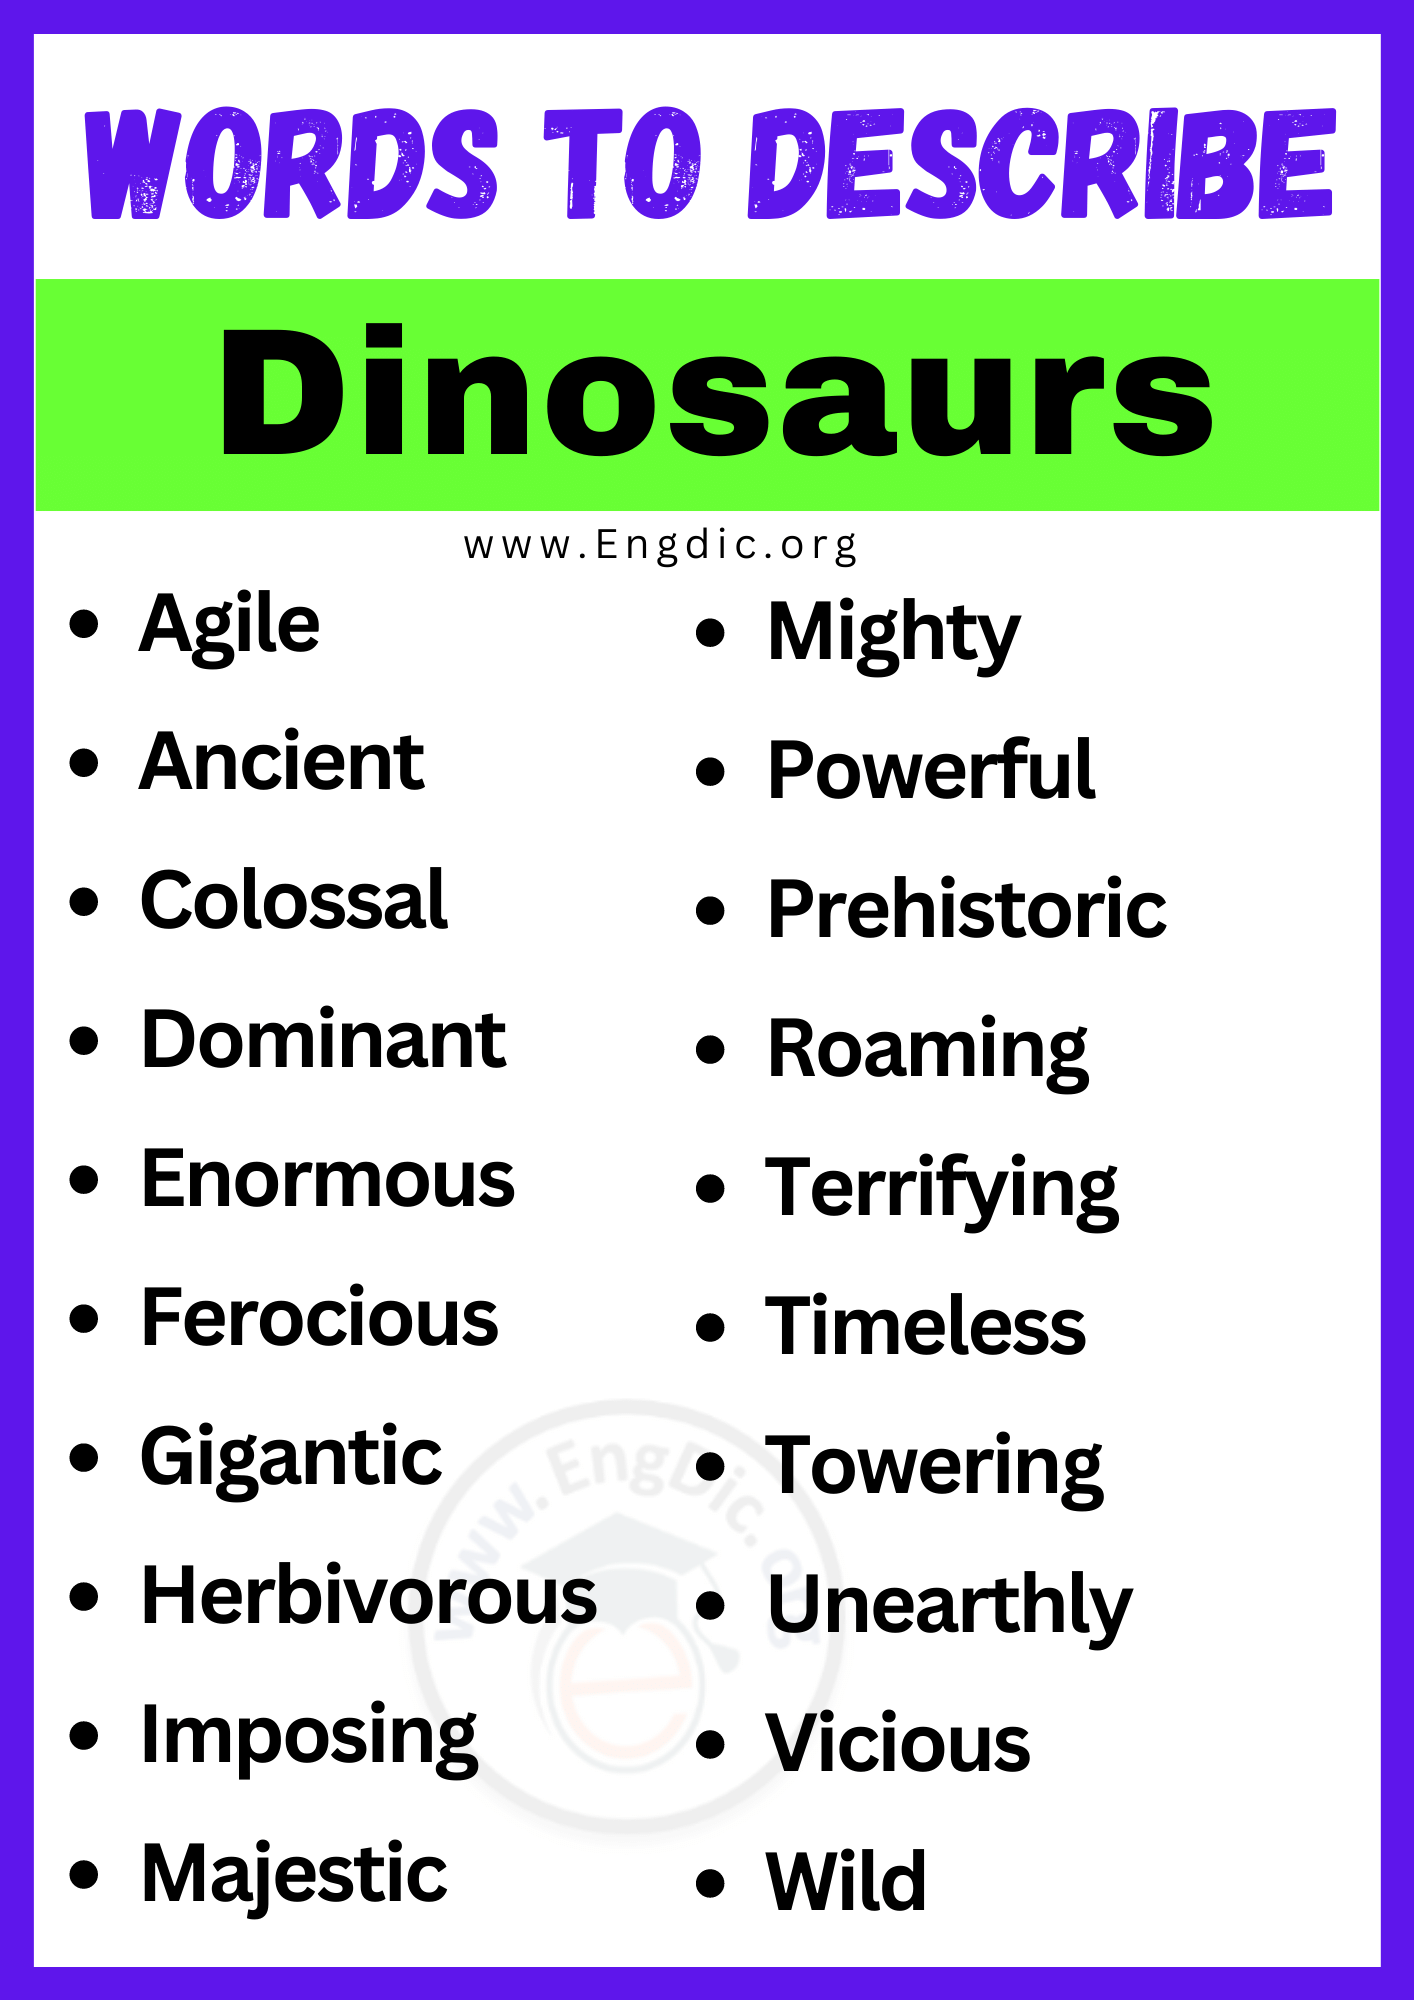 Words to Describe Dinosaurs